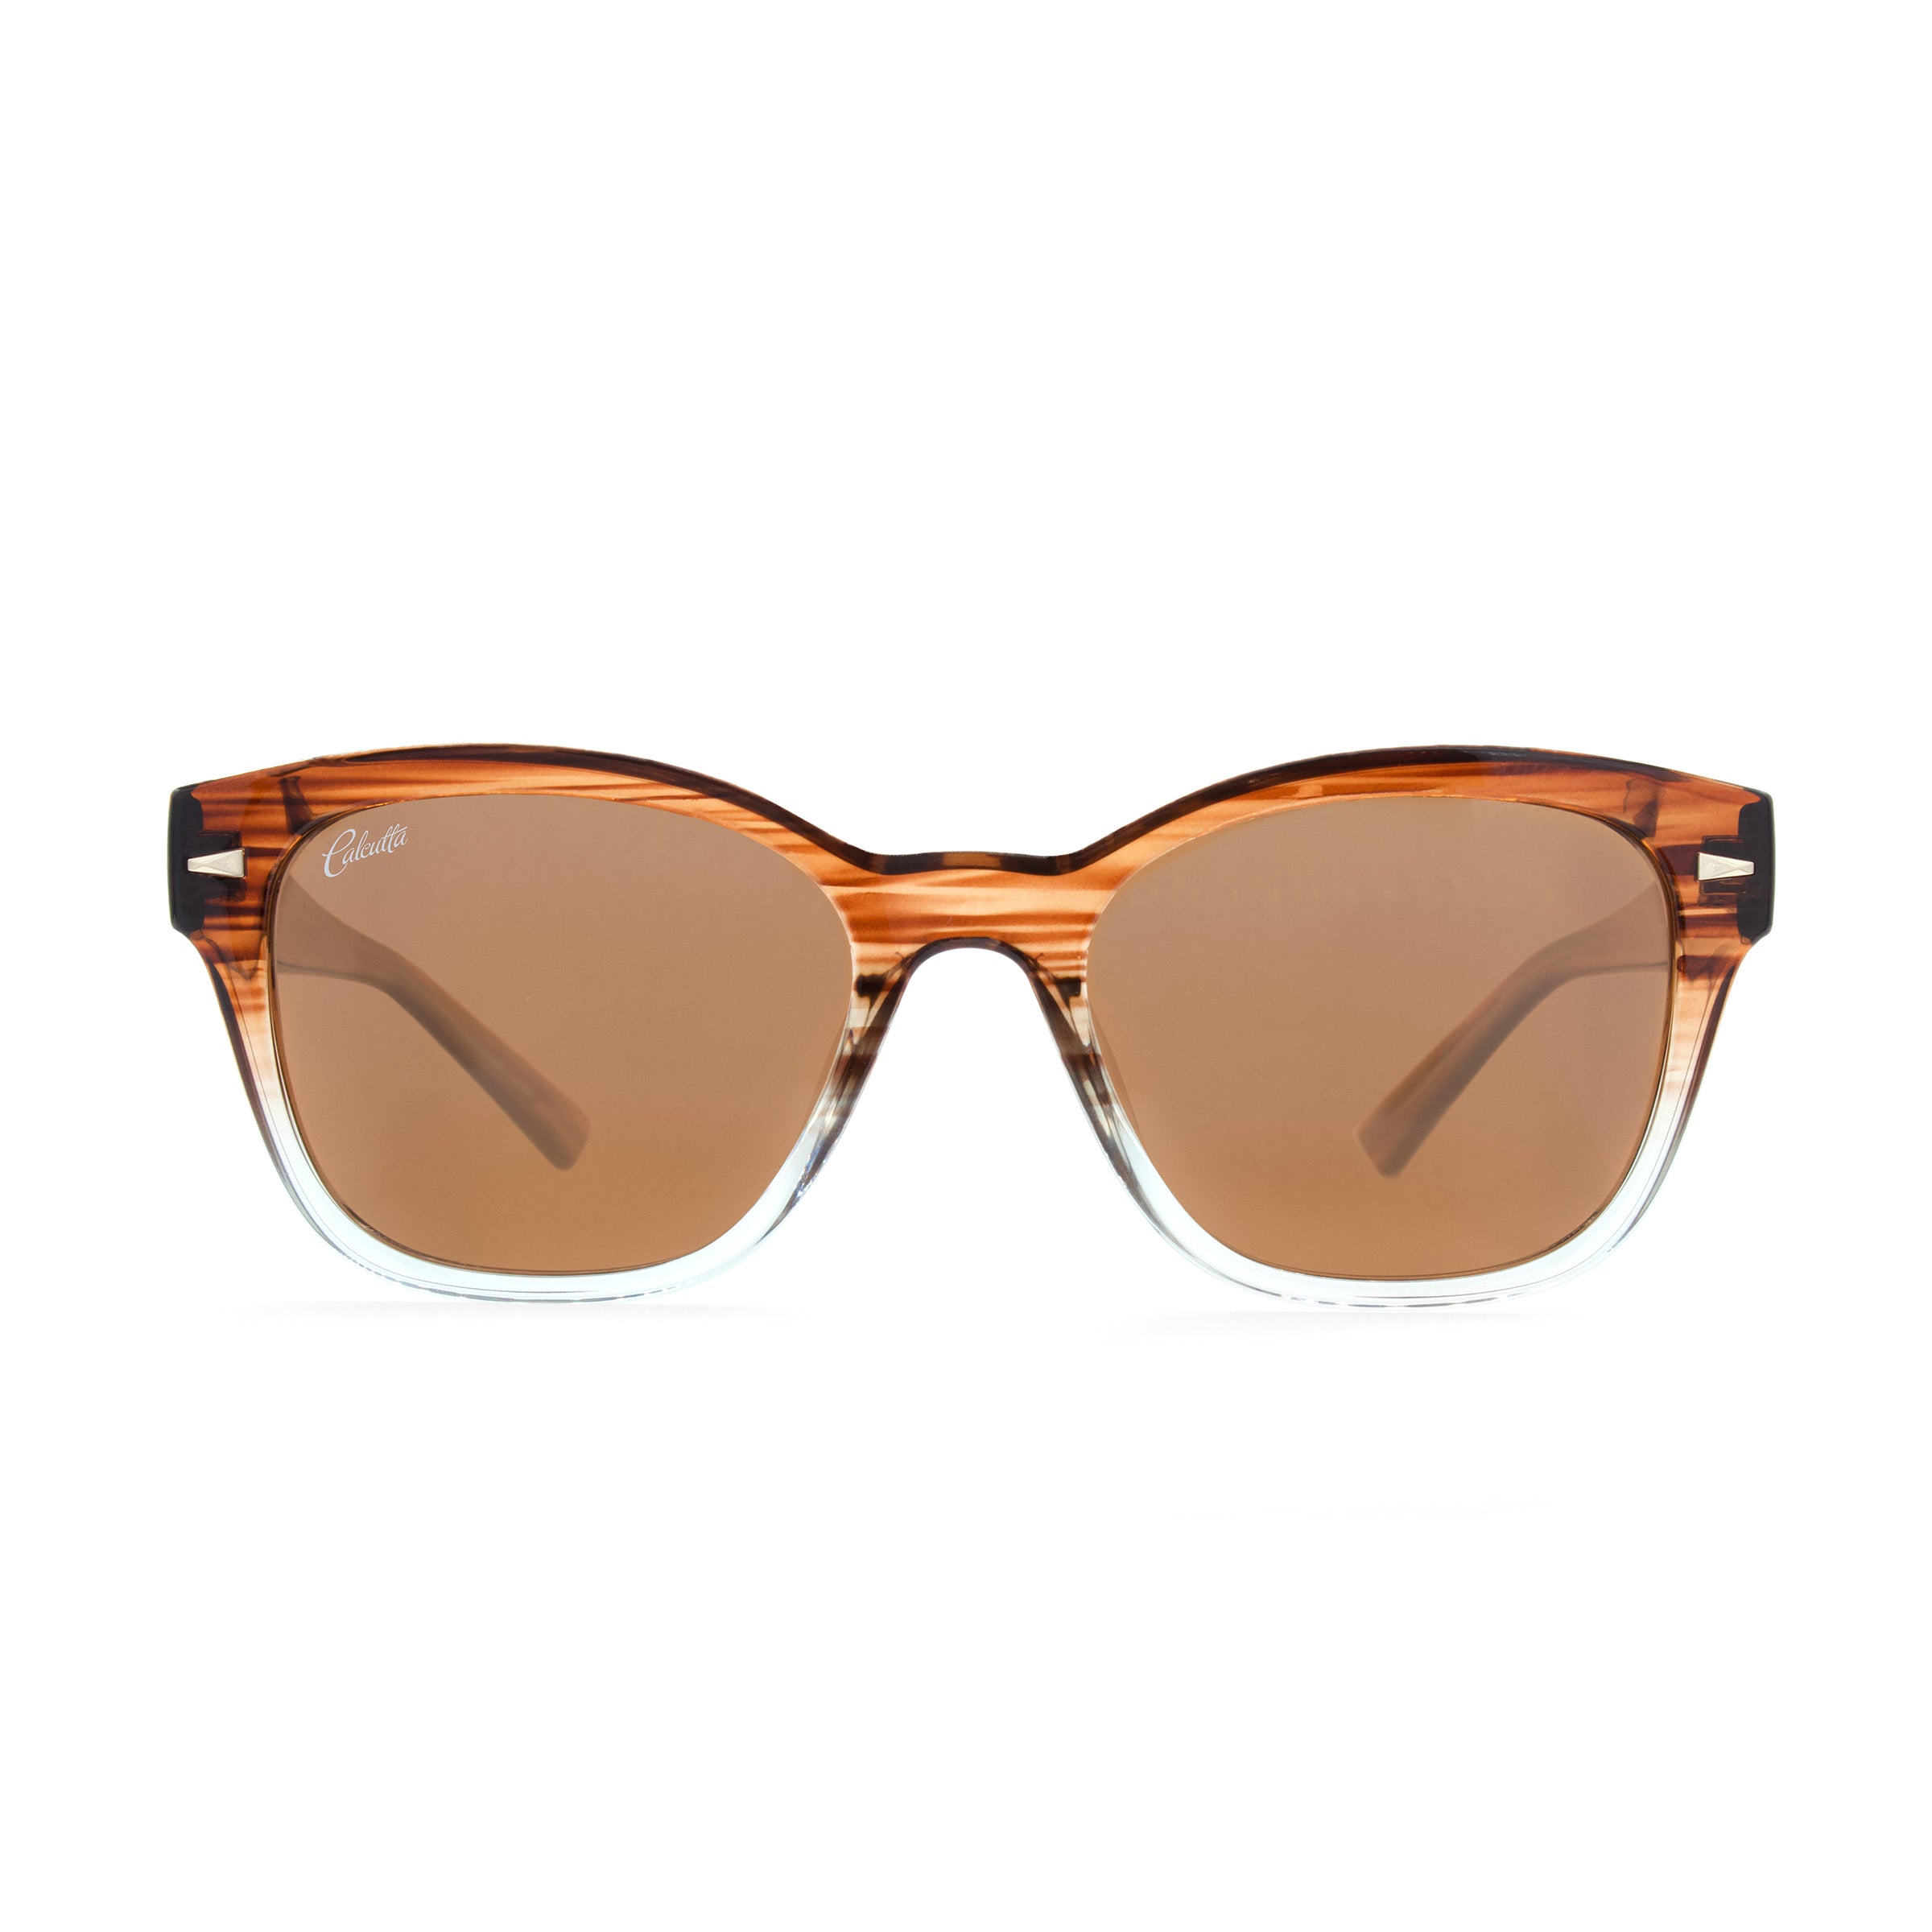 Calcutta Chica sunglasses brown lens front